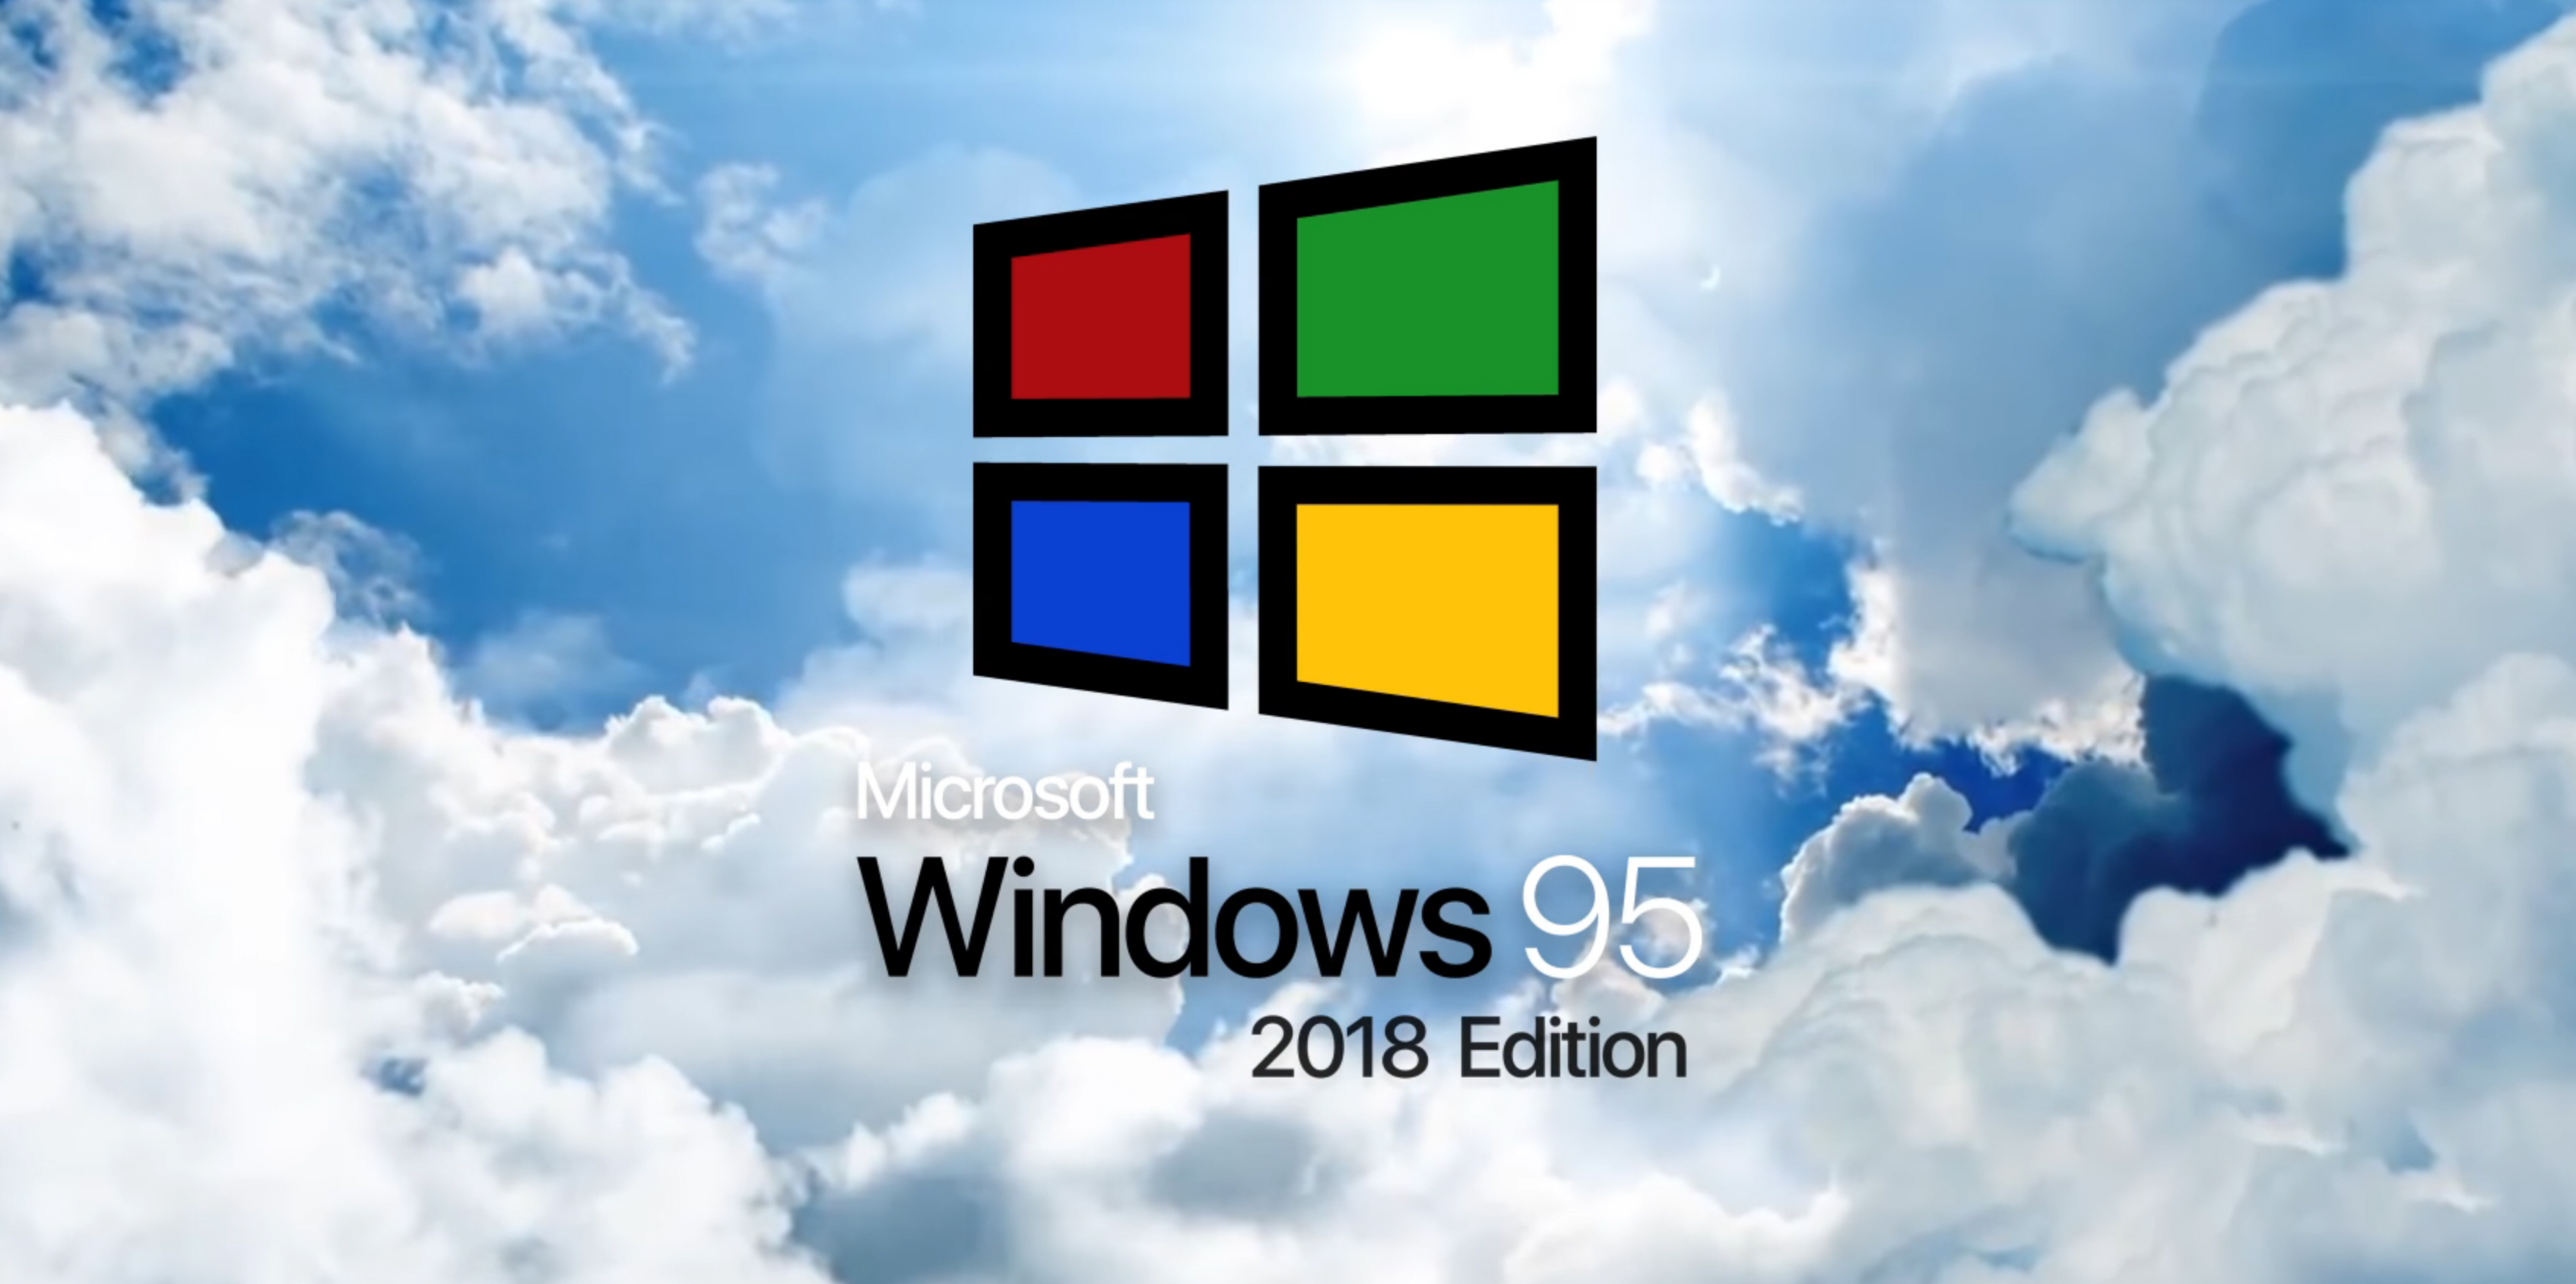 Windows 95 German Iso Download - imageclever